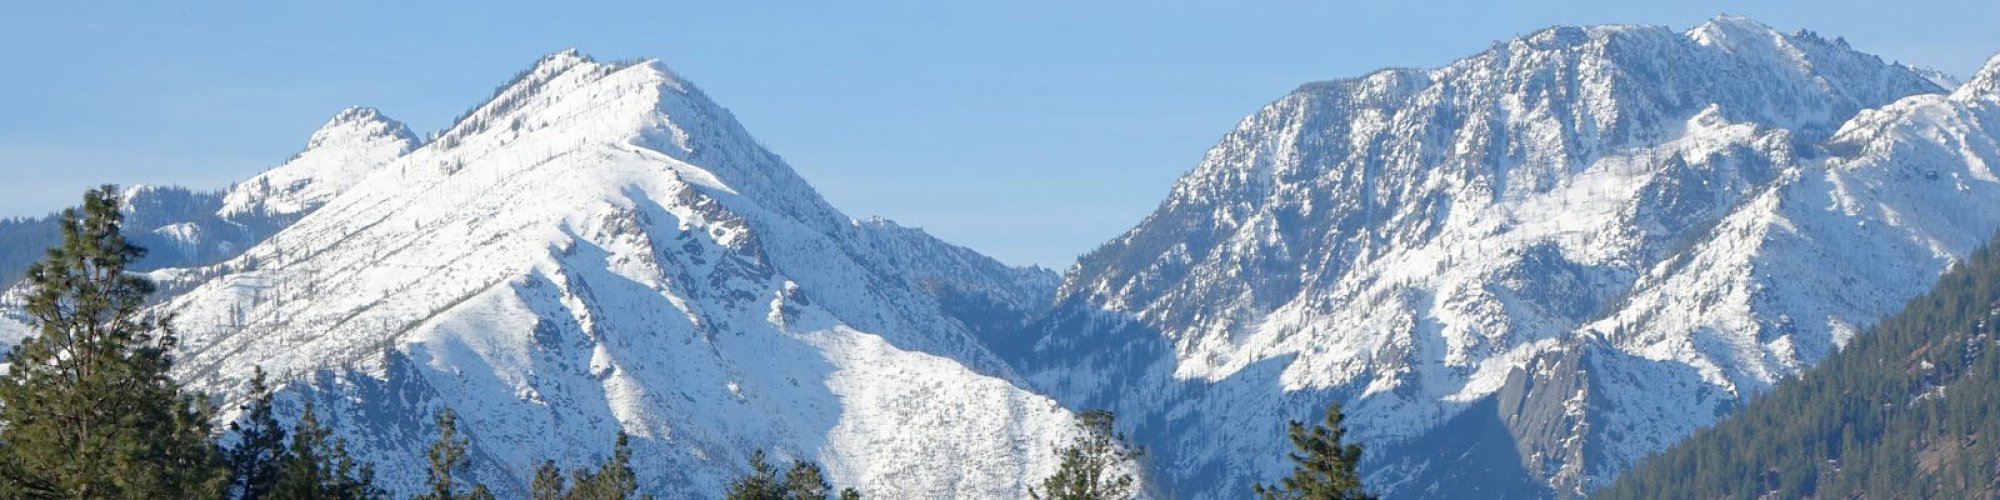 Snowy mountain view in Leavenworth, WA